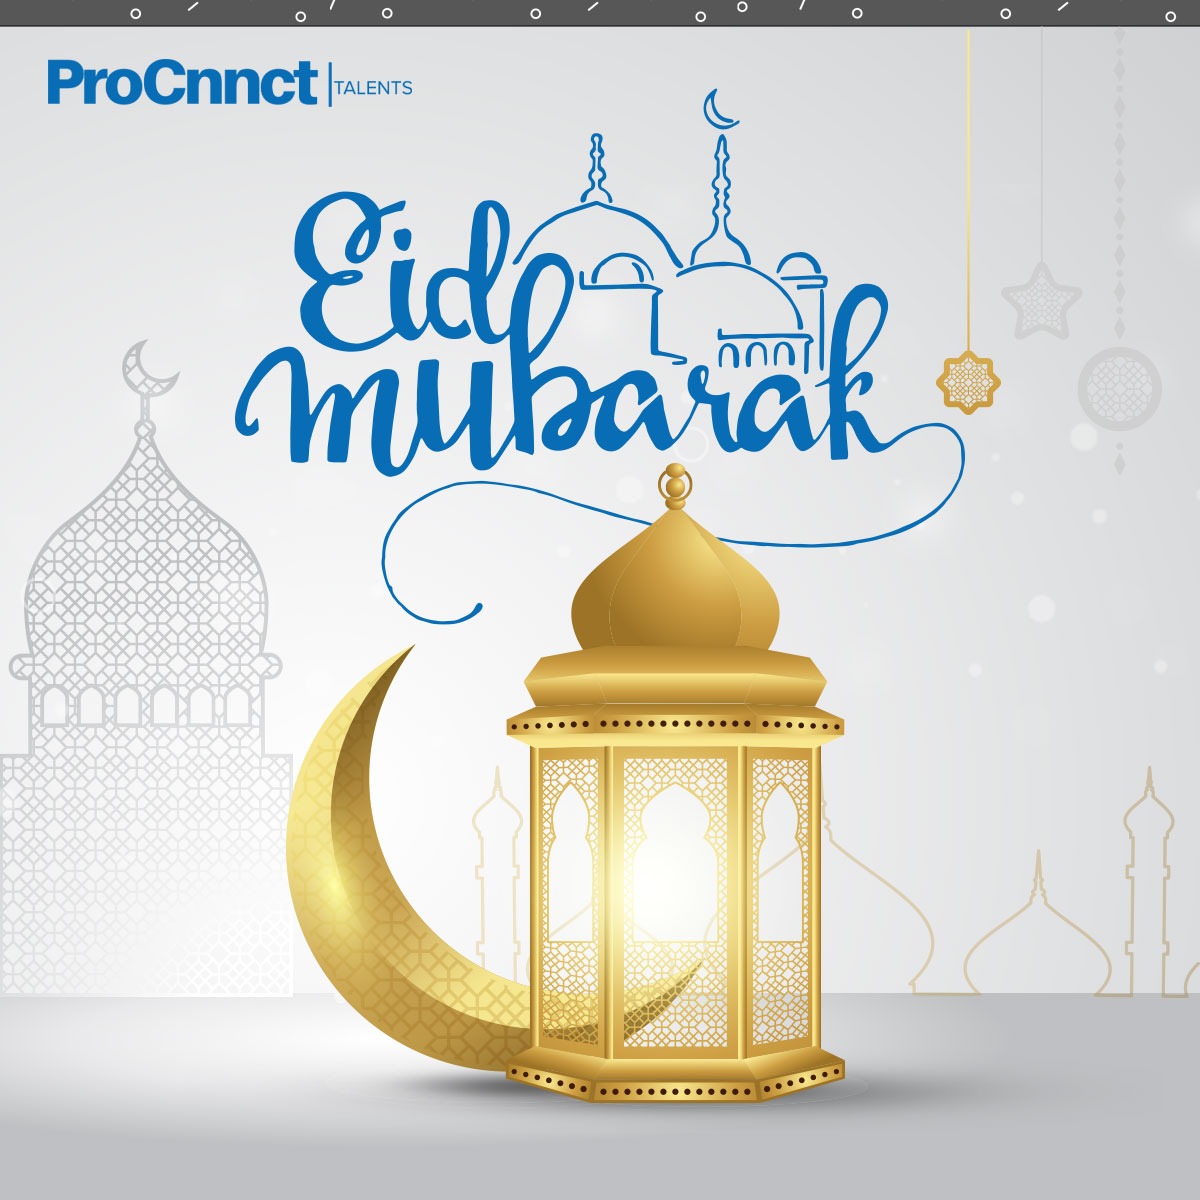 Eid Mubarak!✨

Our best wishes to a joyous Eid filled with peace, happiness, and prosperity! Eid Fitr Mubarak.

 #HappyEid#UAE #Procnnct #EidCelebrations